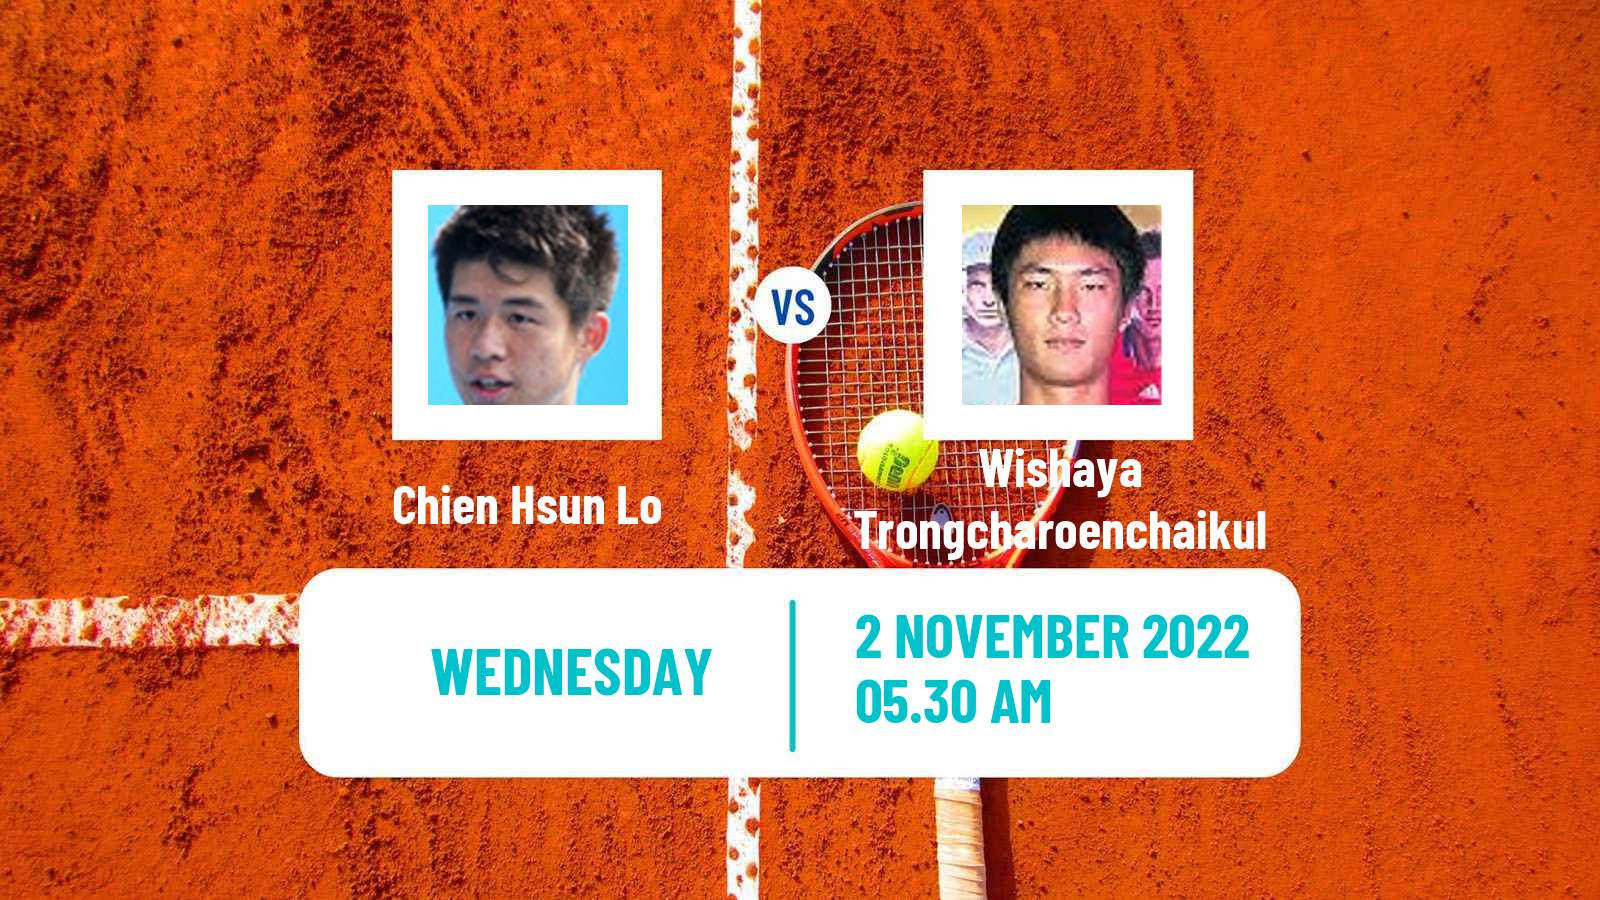 Tennis ITF Tournaments Chien Hsun Lo - Wishaya Trongcharoenchaikul